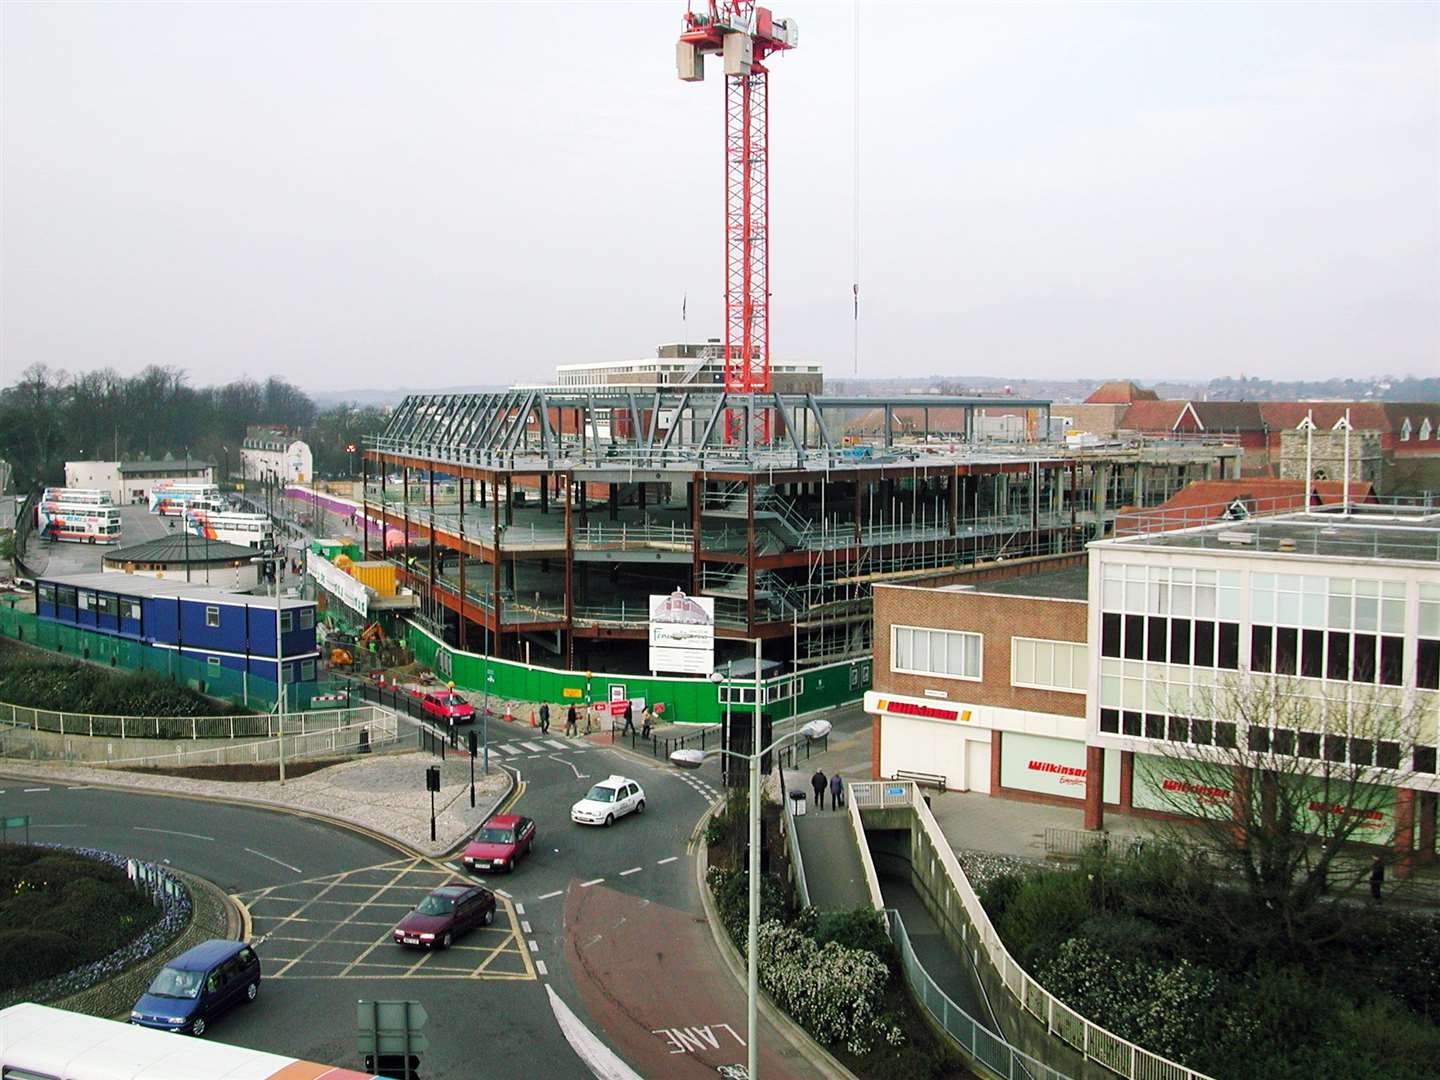 Fenwick being built in 2002